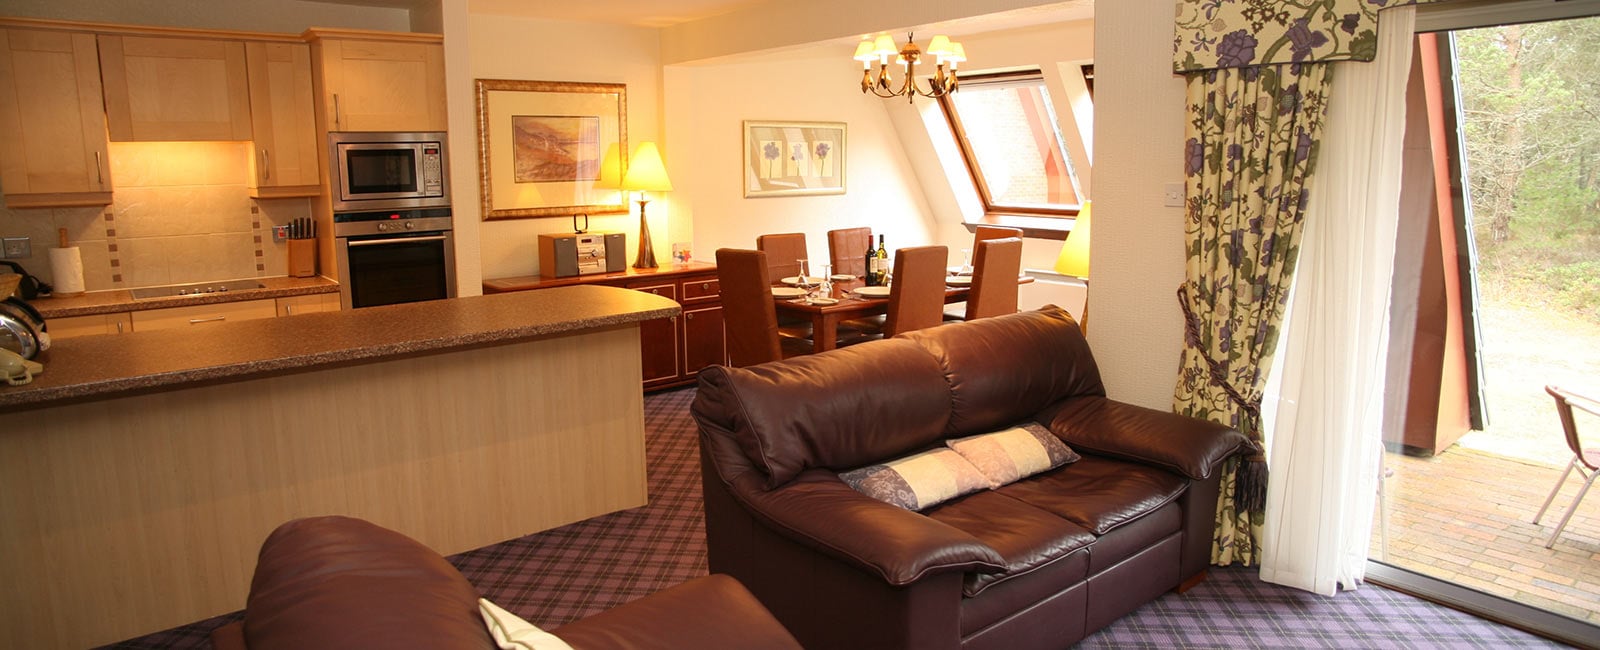 Interior at Hilton Grand Vacations Club at Coylumbridge in Inverness-shire, Scotland